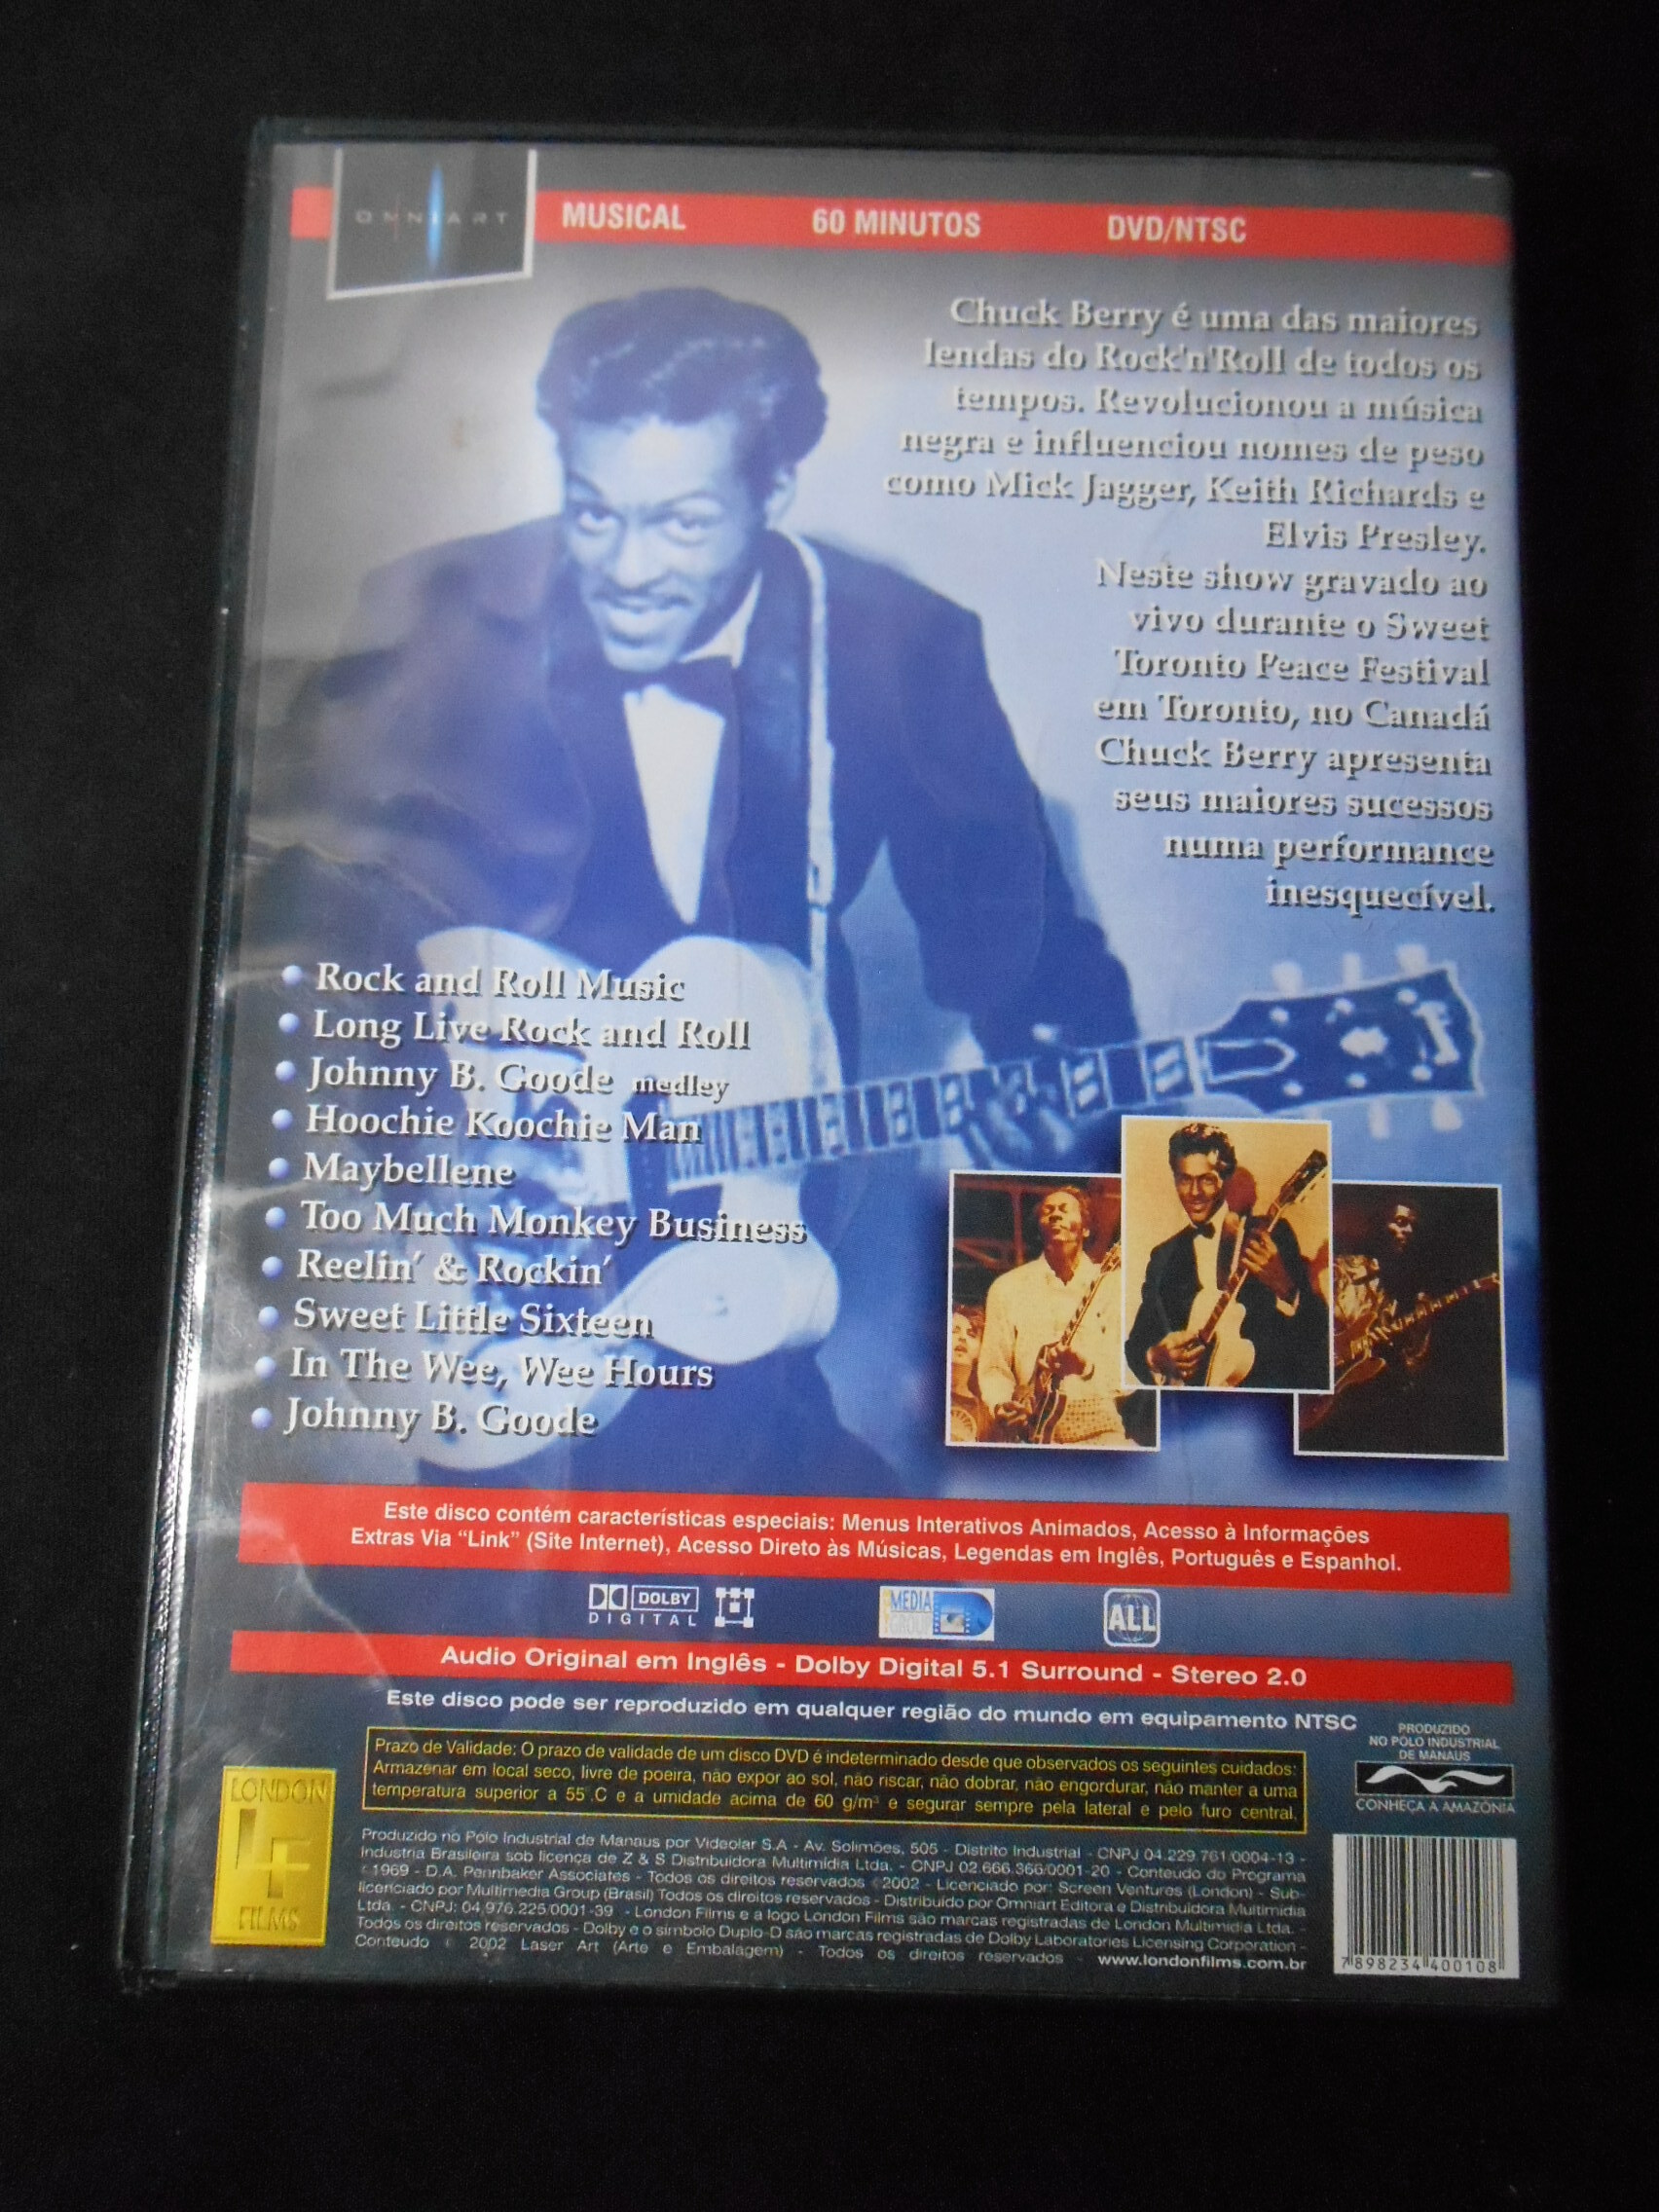 DVD - Chuck Berry - Live in Toronto